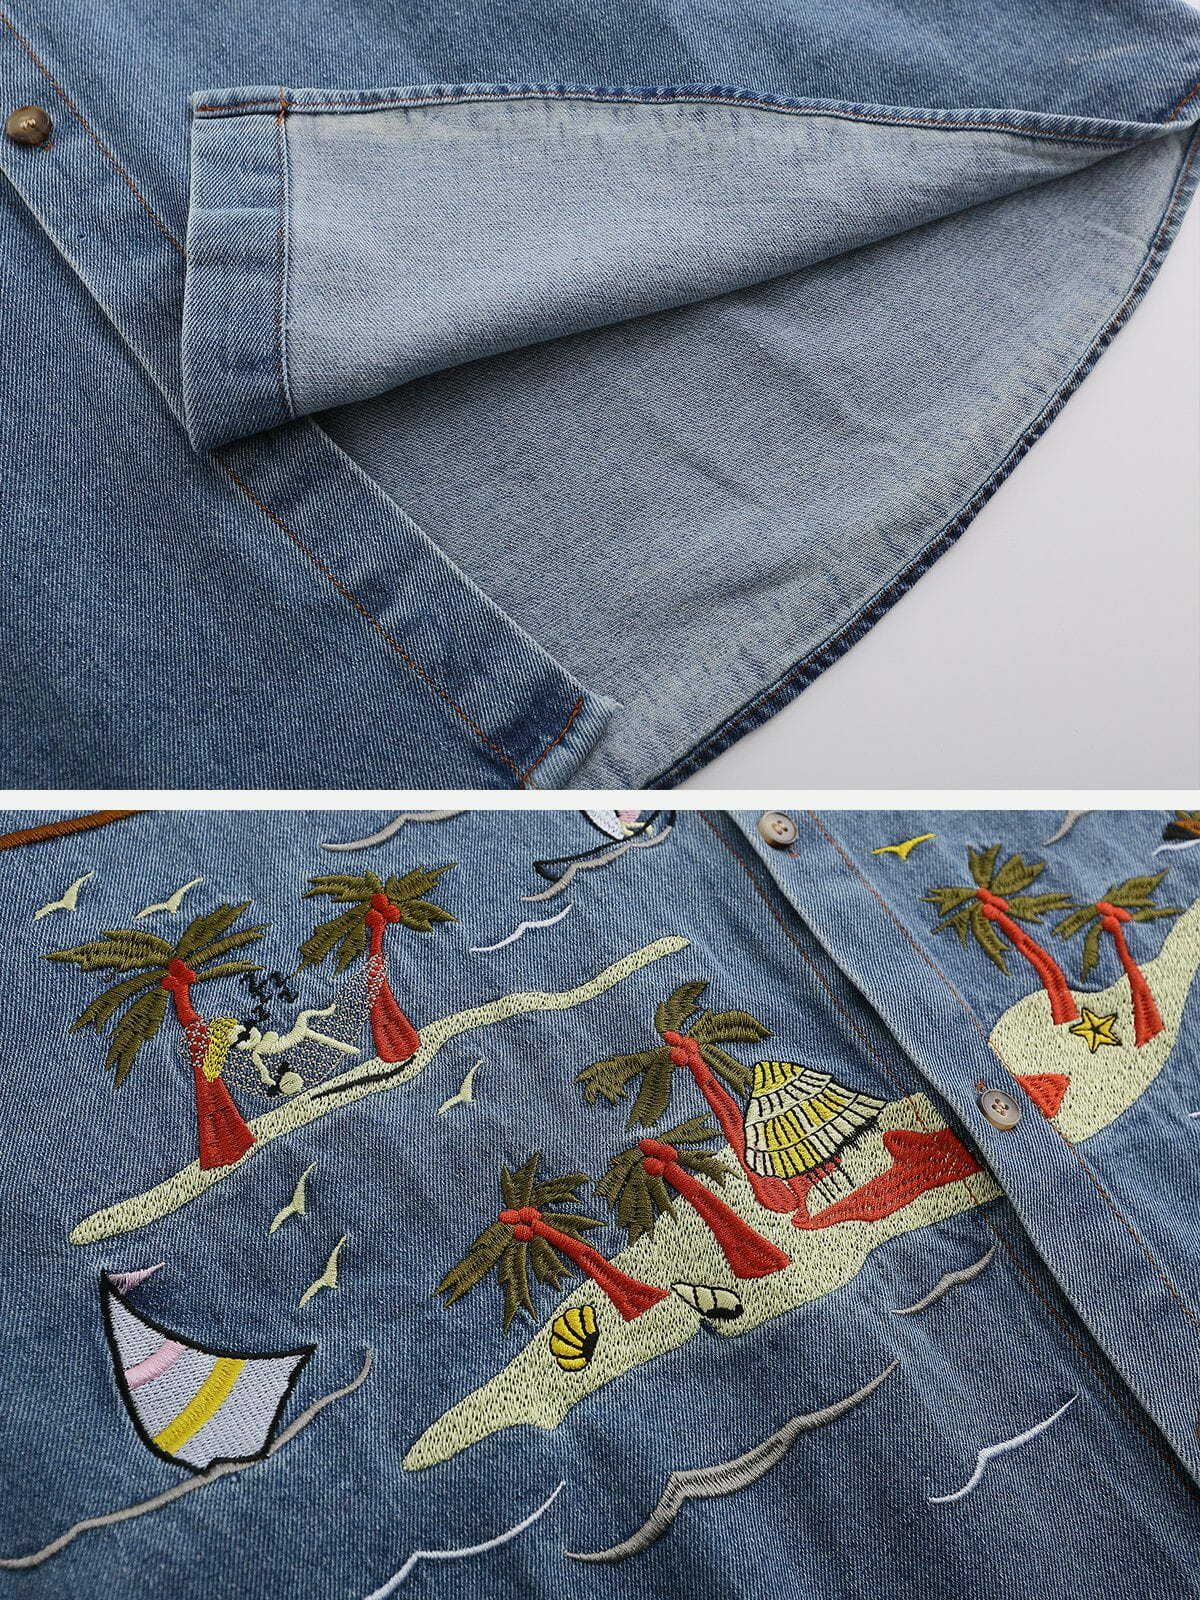 denim embroidered short sleeve shirt vintage stitched edge 2891